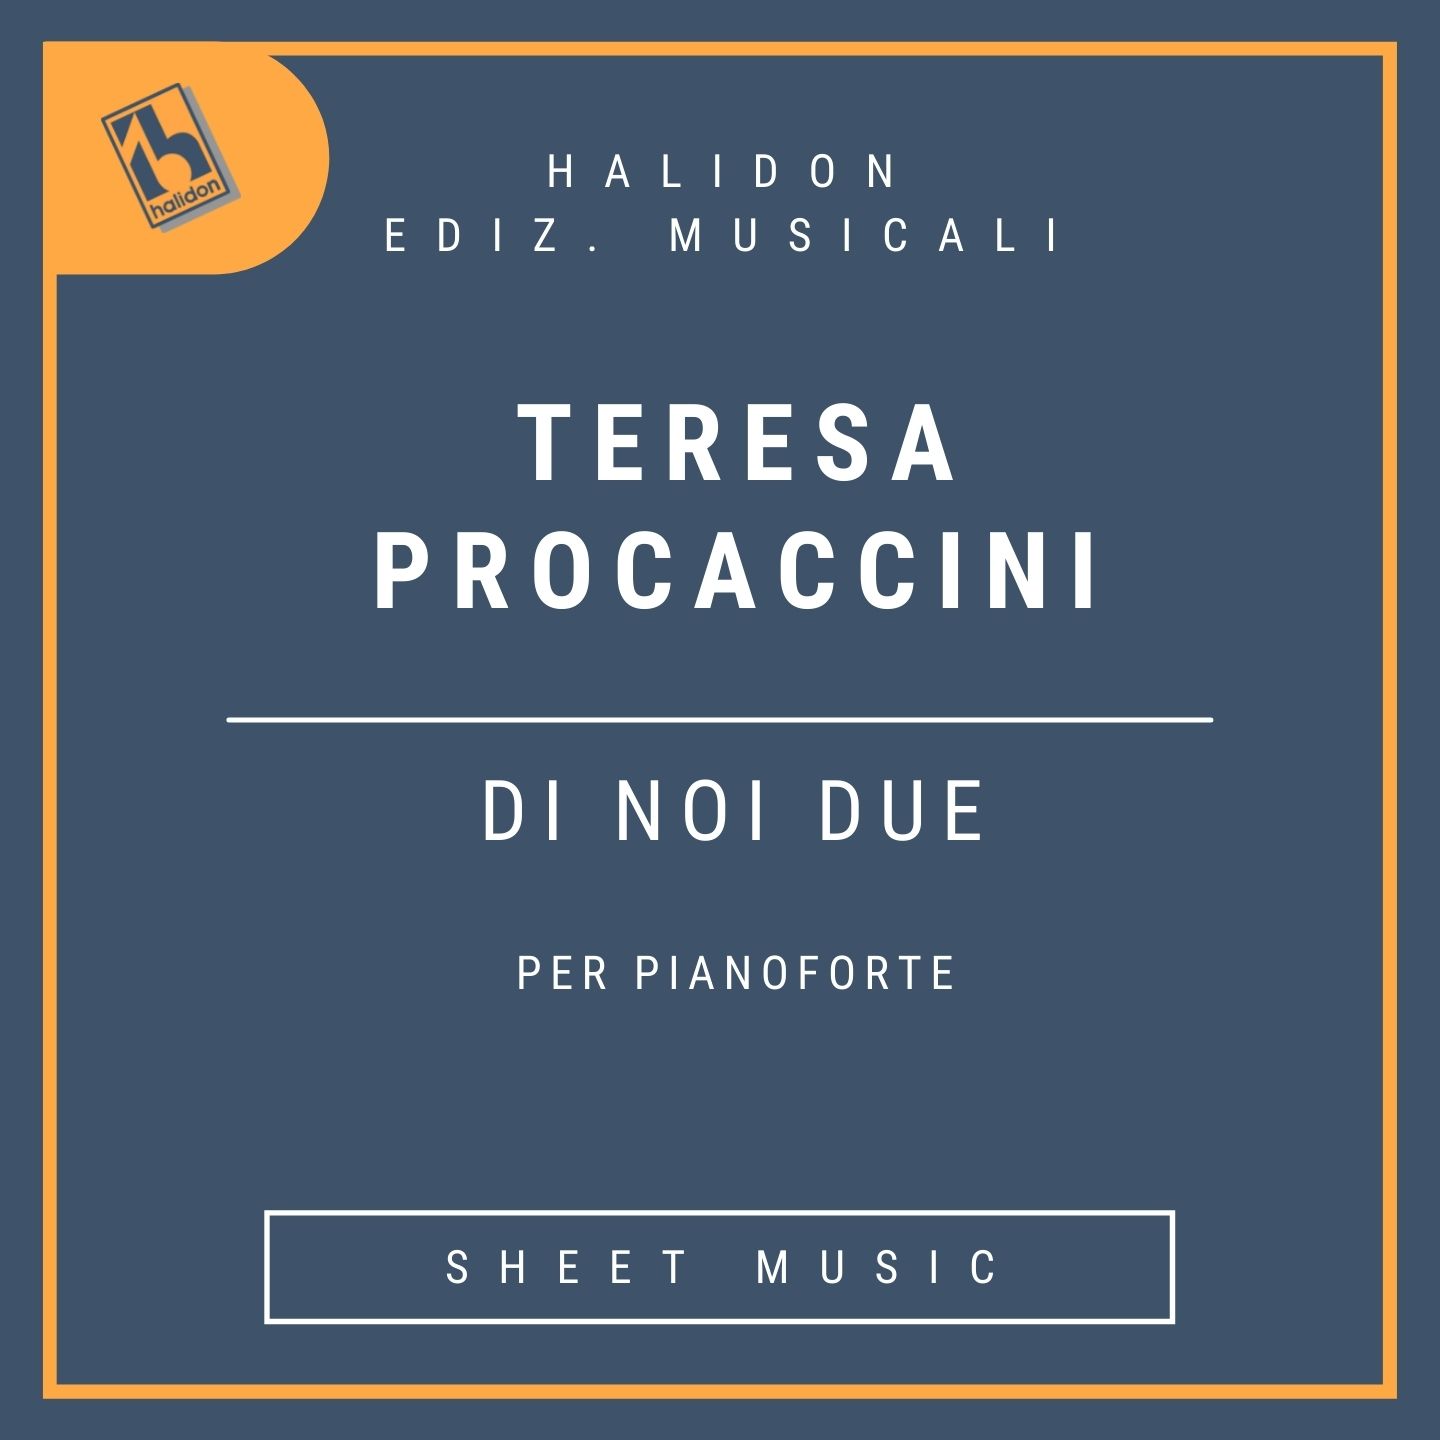 Teresa Procaccini - Di noi due